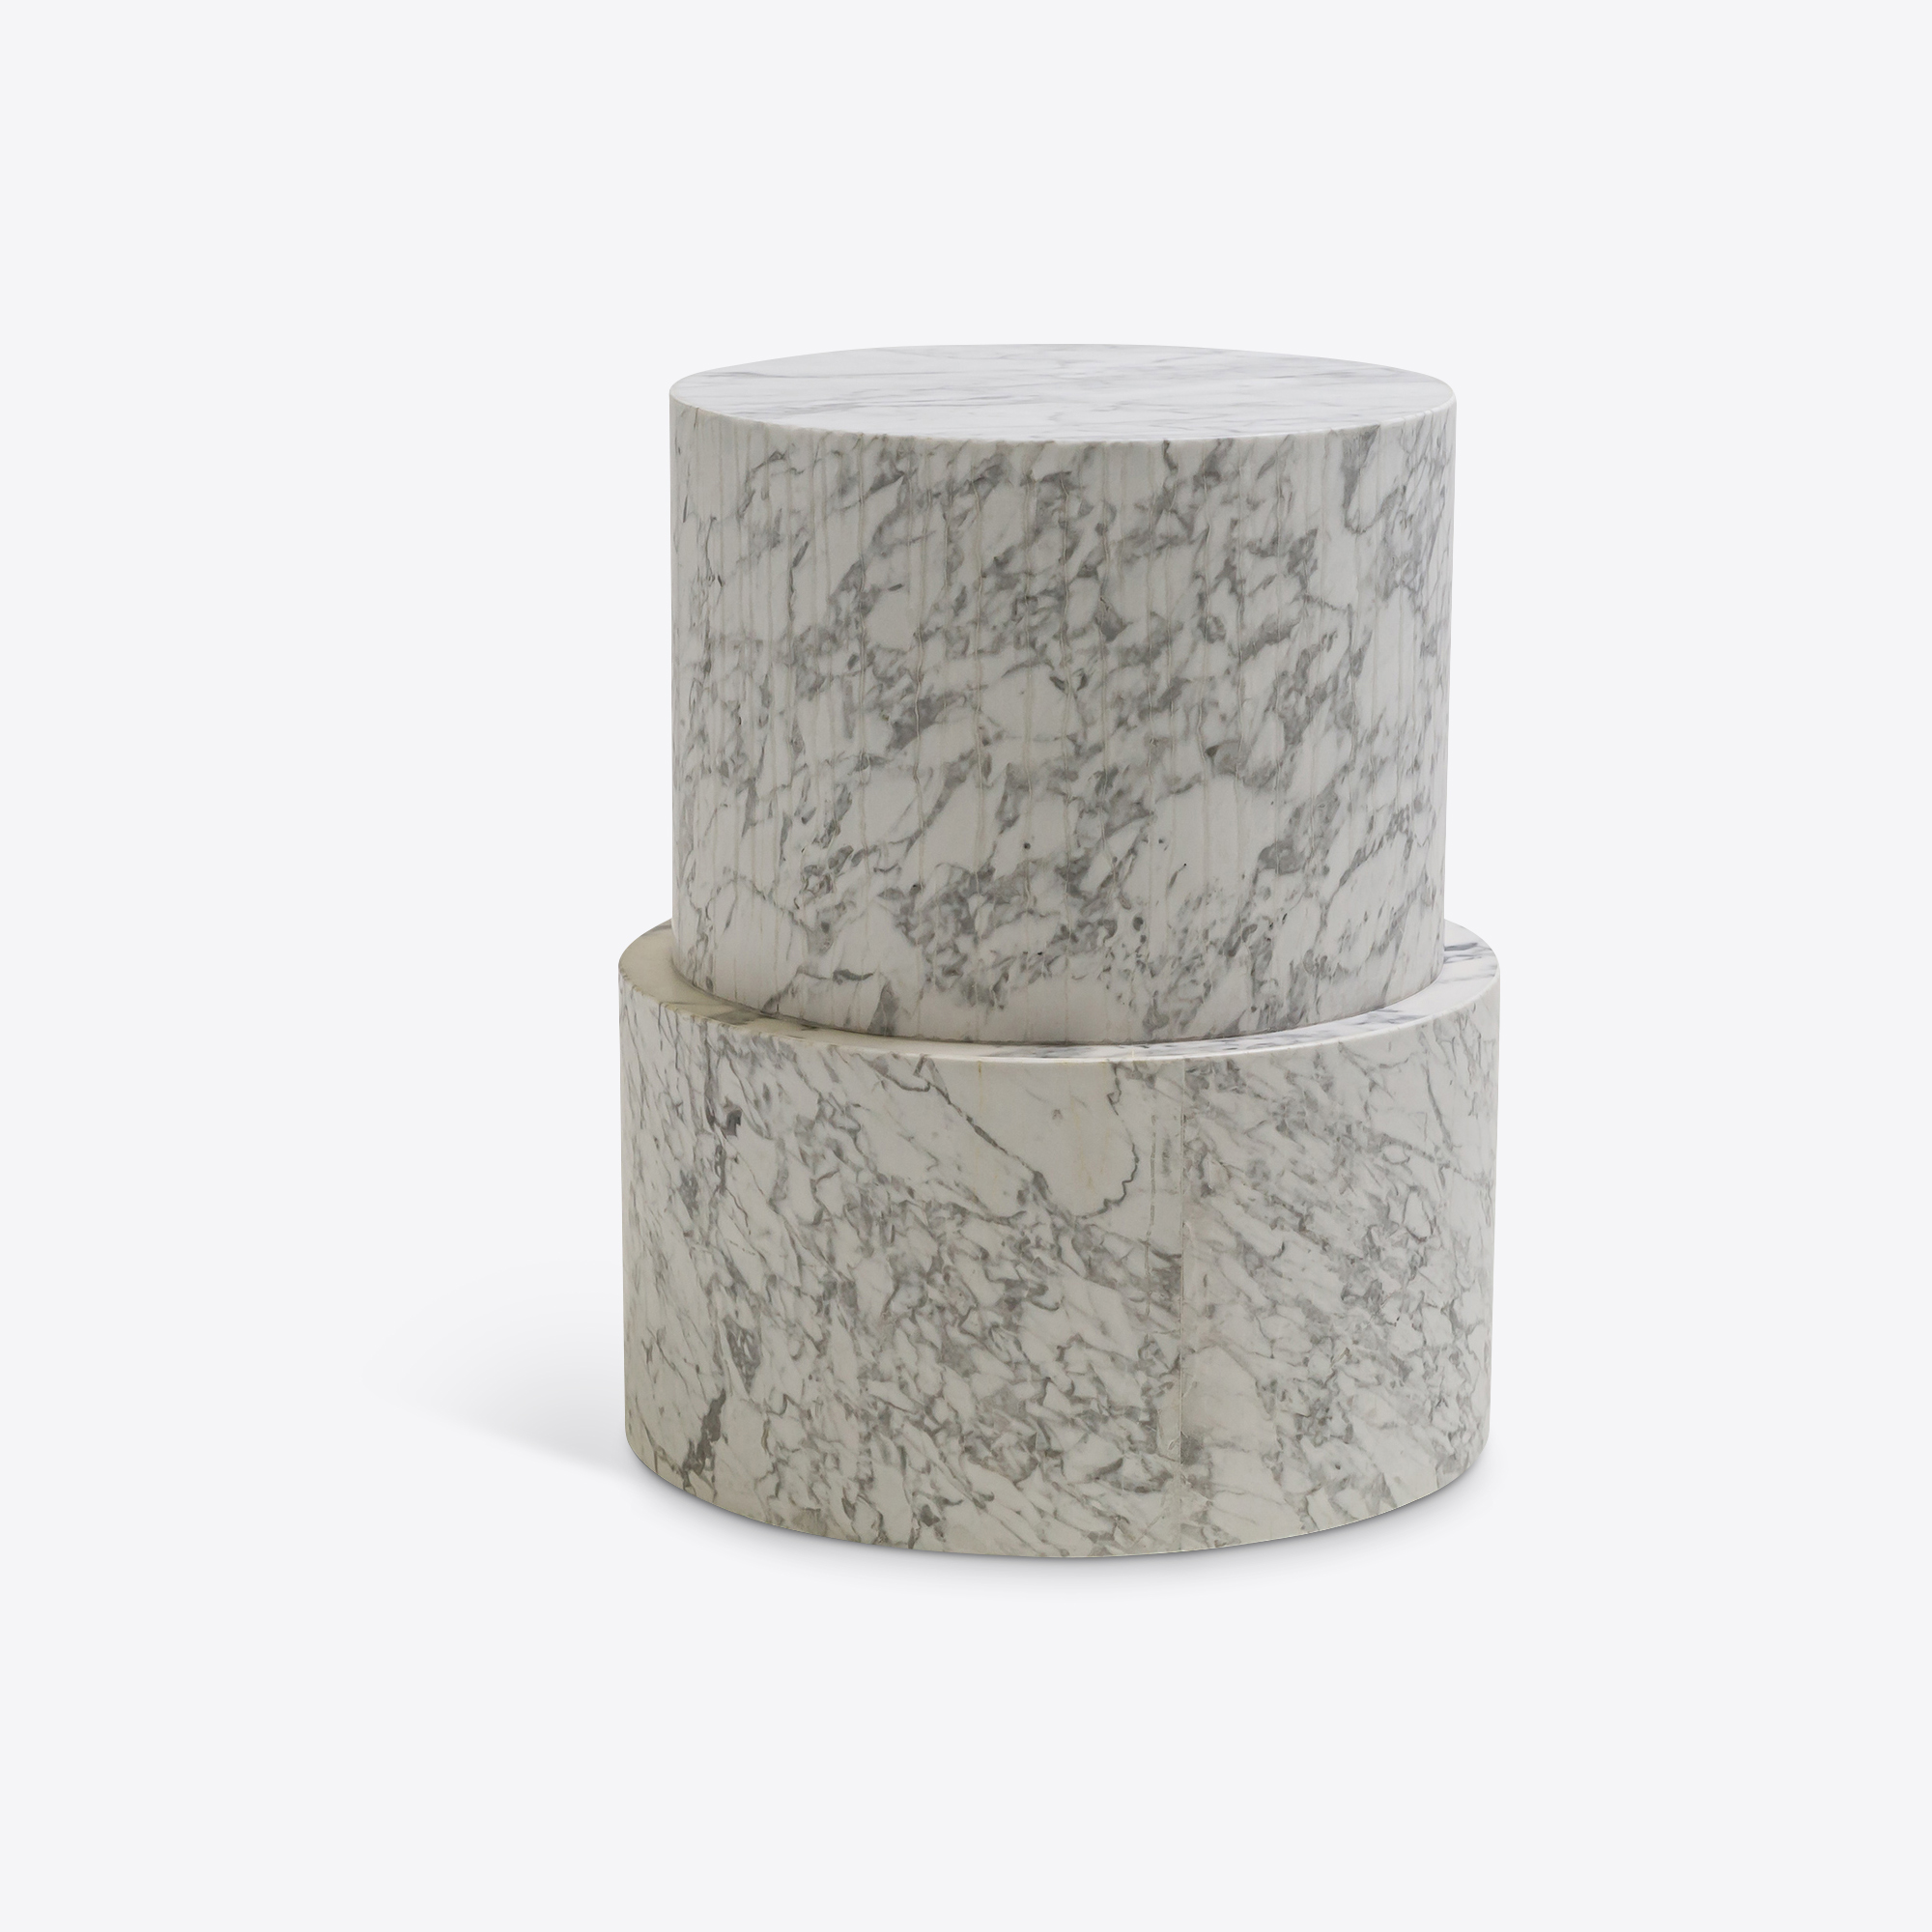 Carrara marble plinth side end table